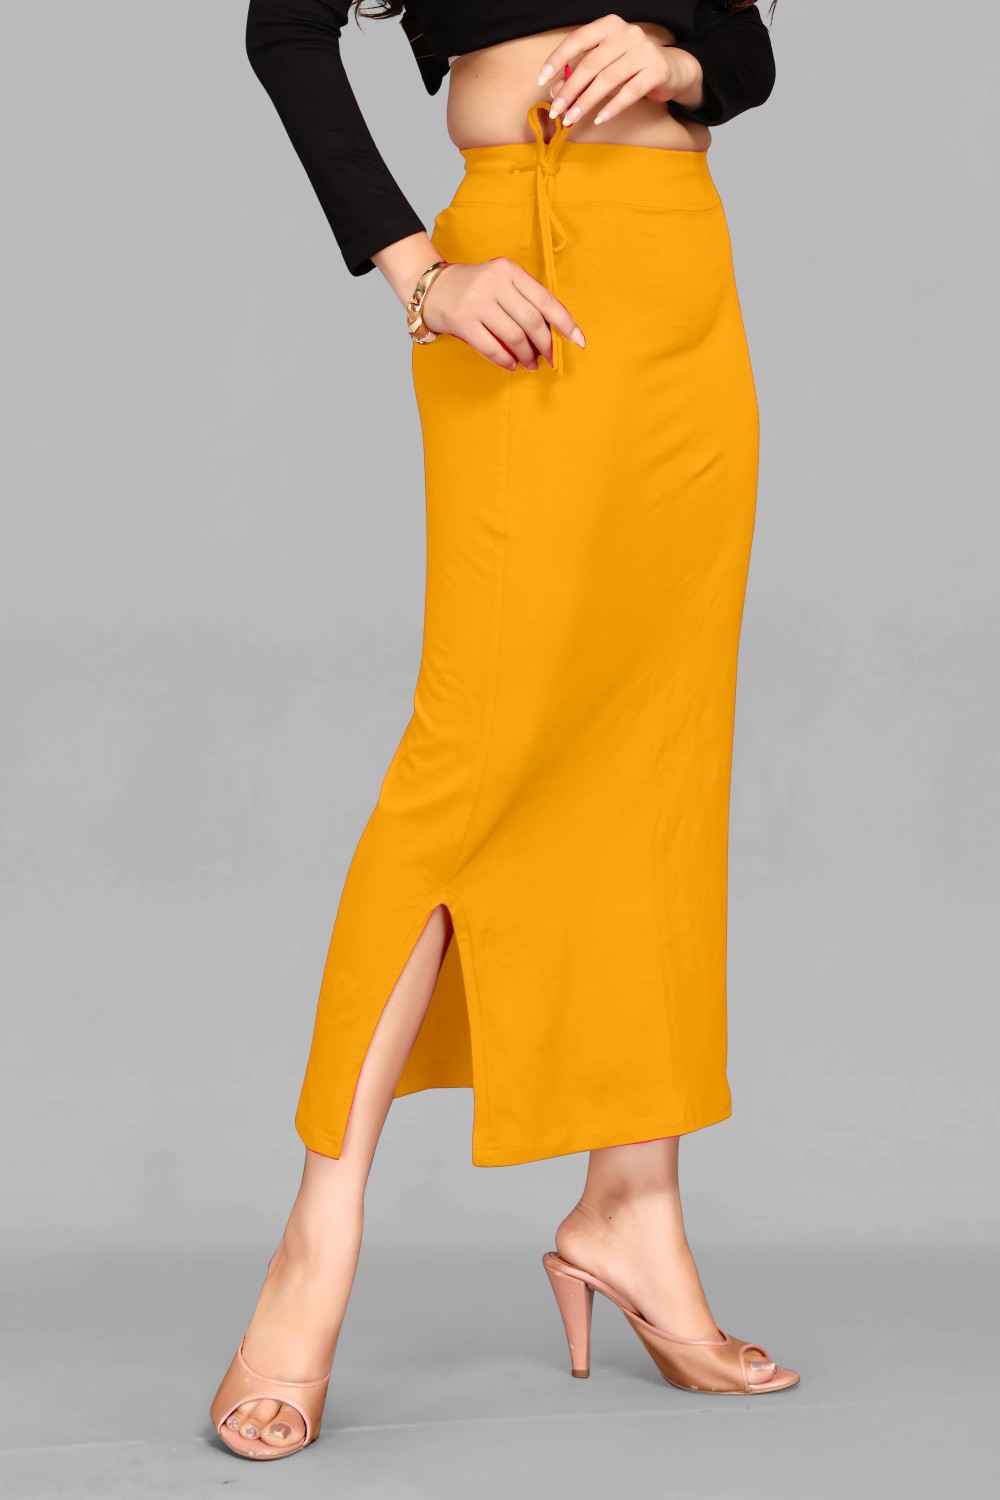 https://rukminim1.flixcart.com/image/1500/1500/kr58yvk0/shapewear/b/g/t/m-sc-pc-rope-3312-mustard-yellow-scube-designs-original-imag4zd5w5hyefcj.jpeg?q=90